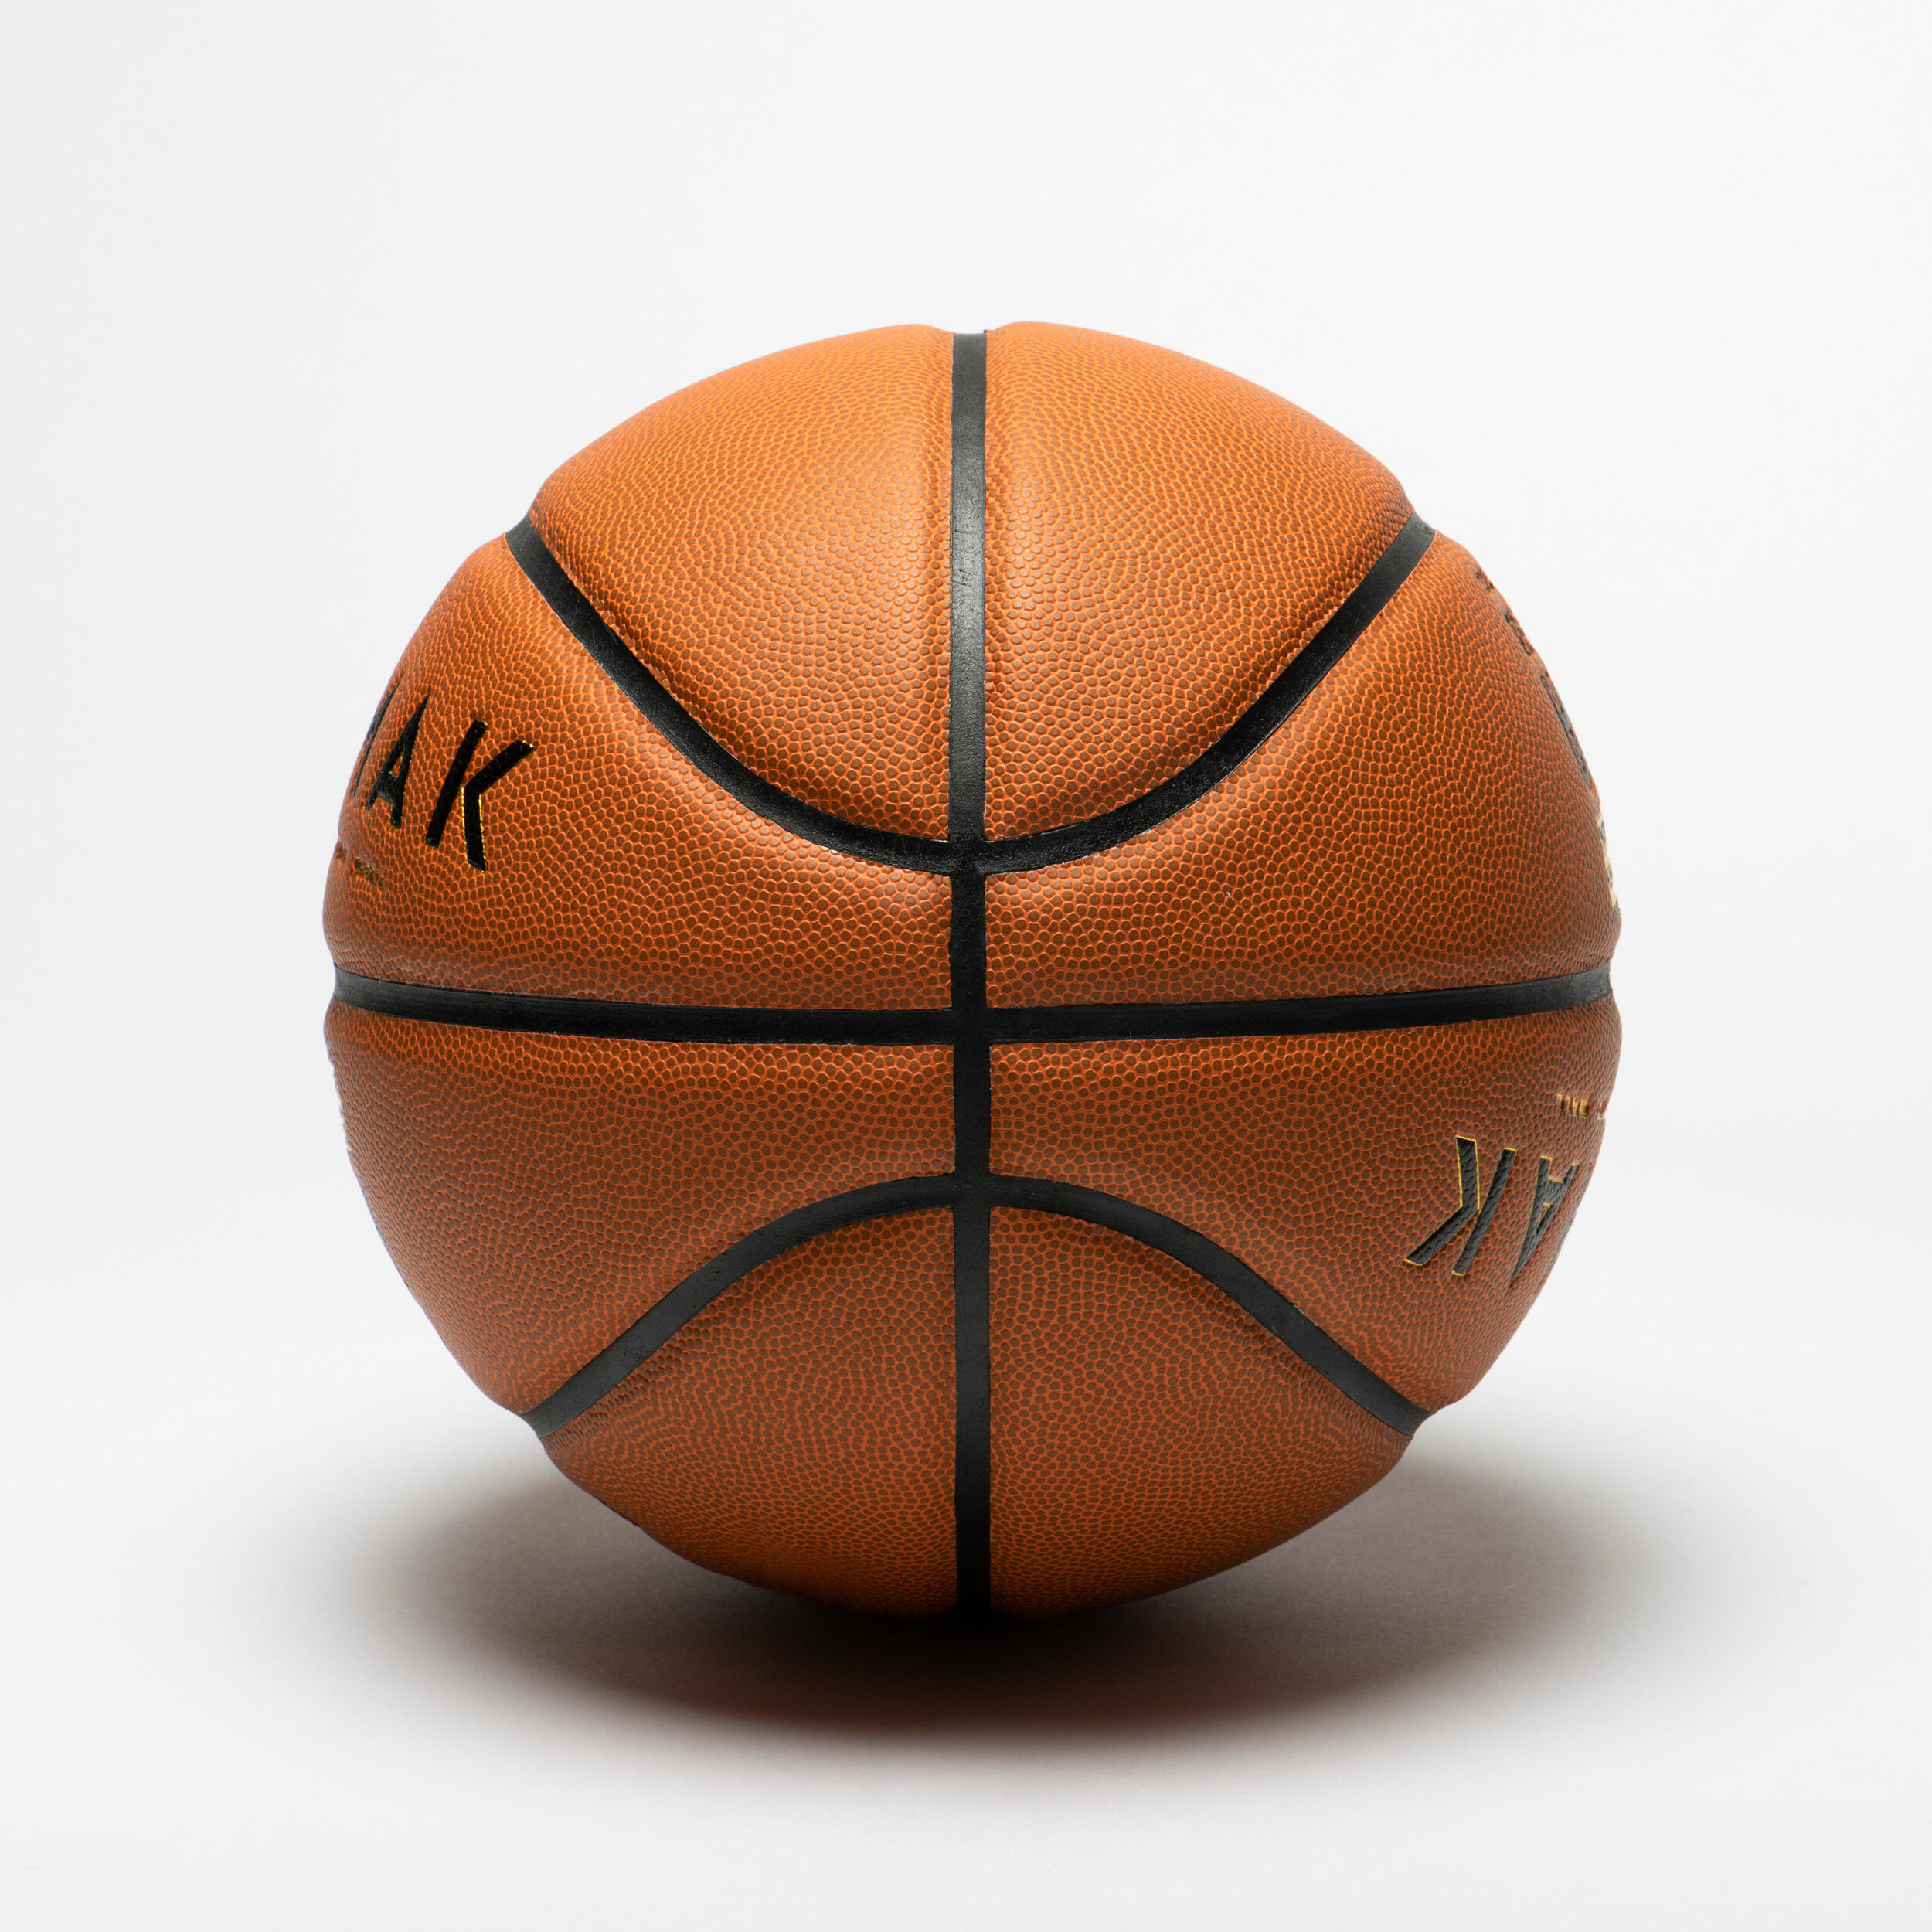 Size 7 FIBA Basketball BT900 Grip - Orange 4/7